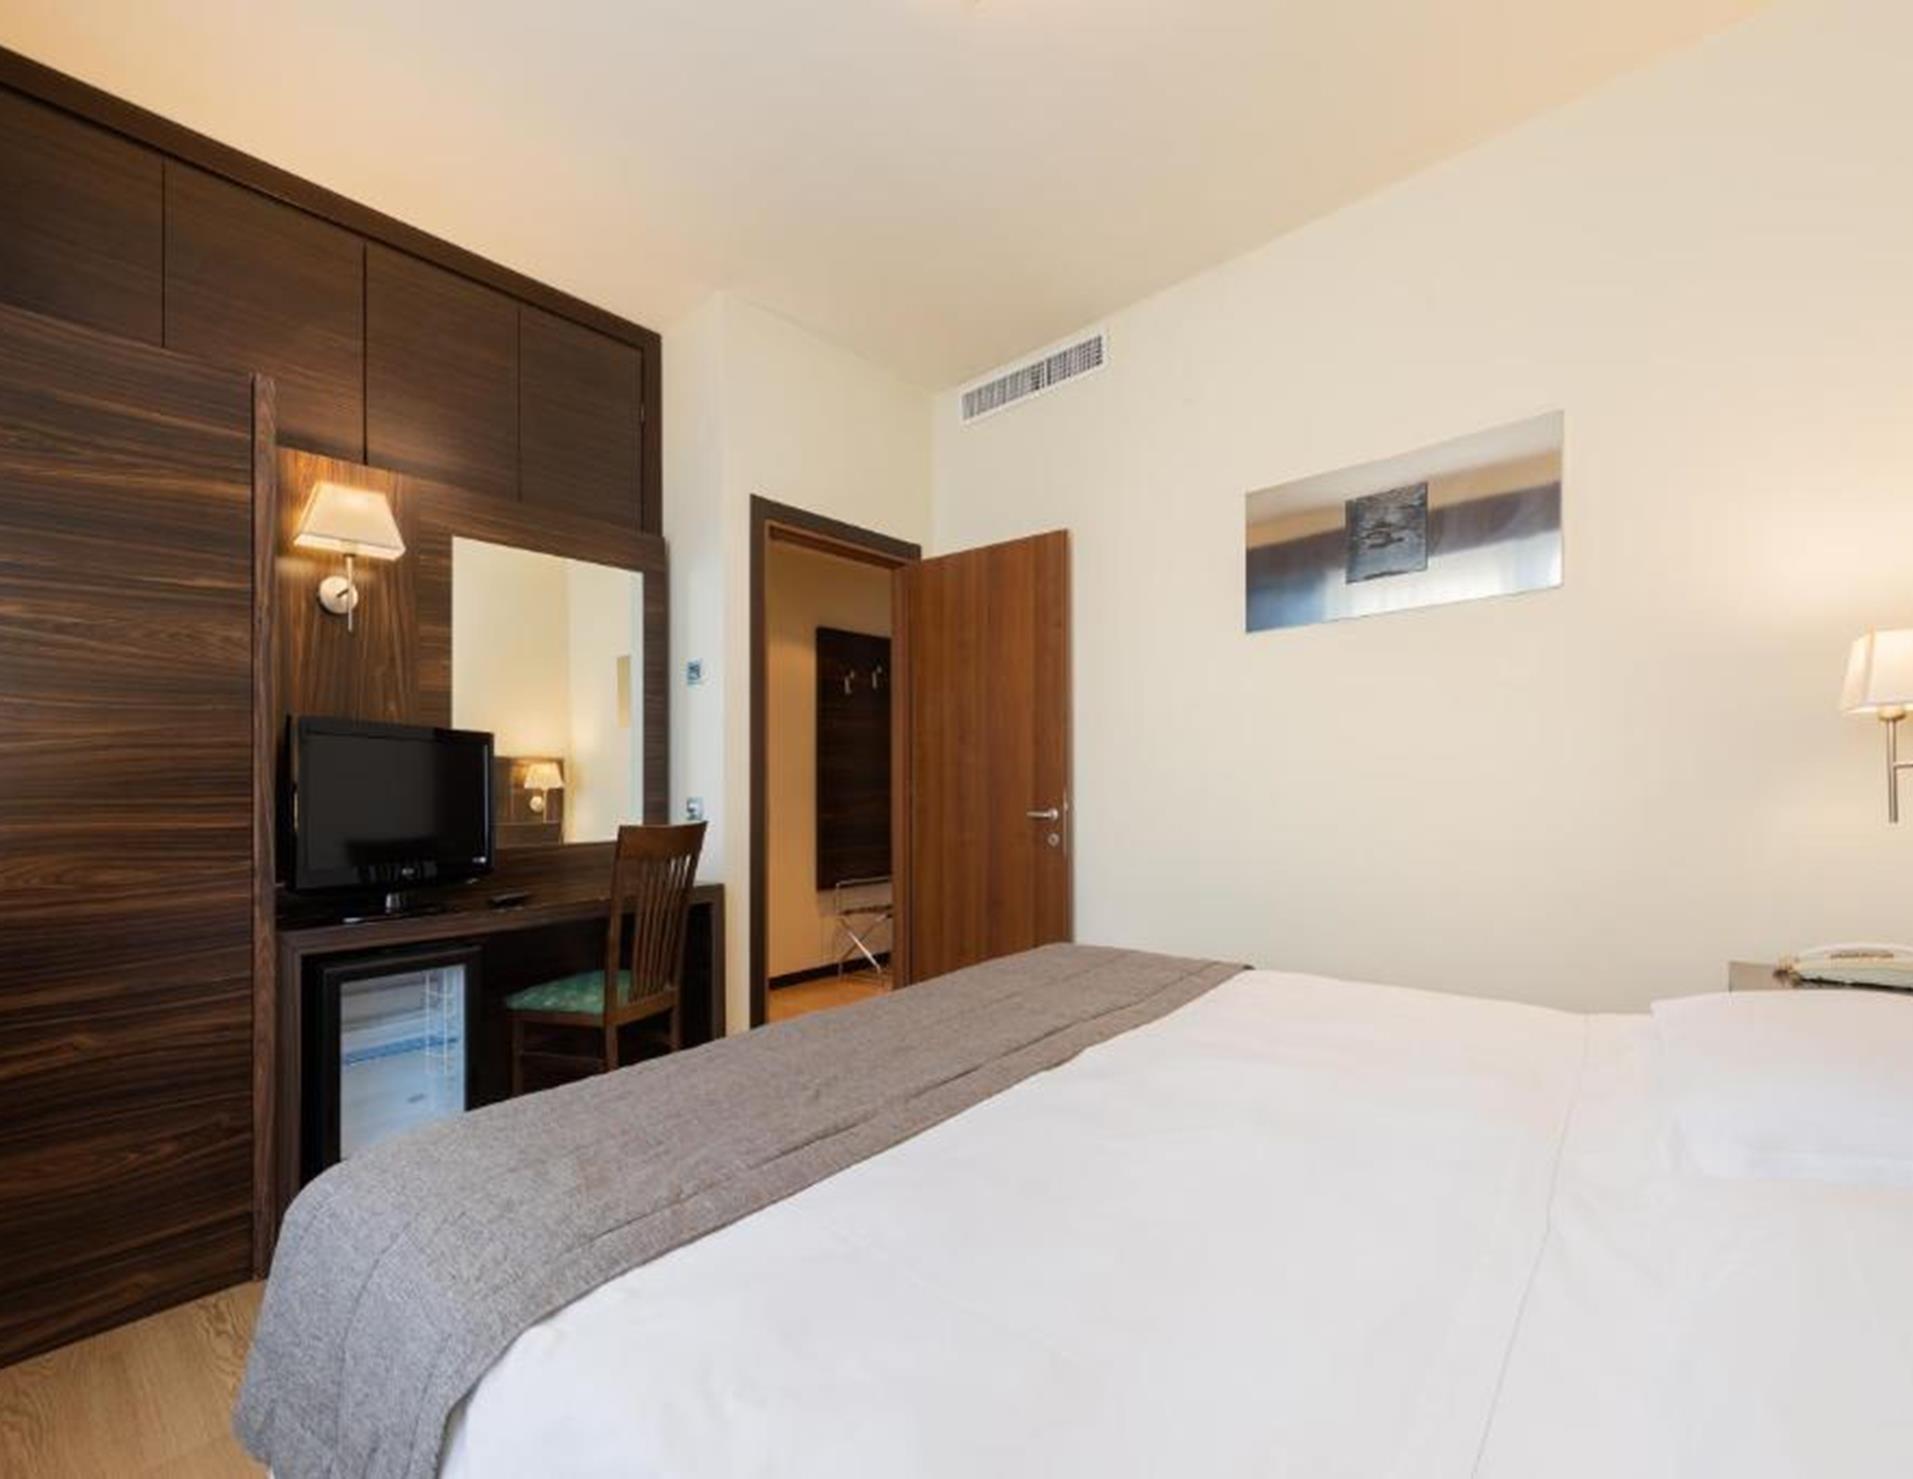 Quality Hotel Delfino - Room 8